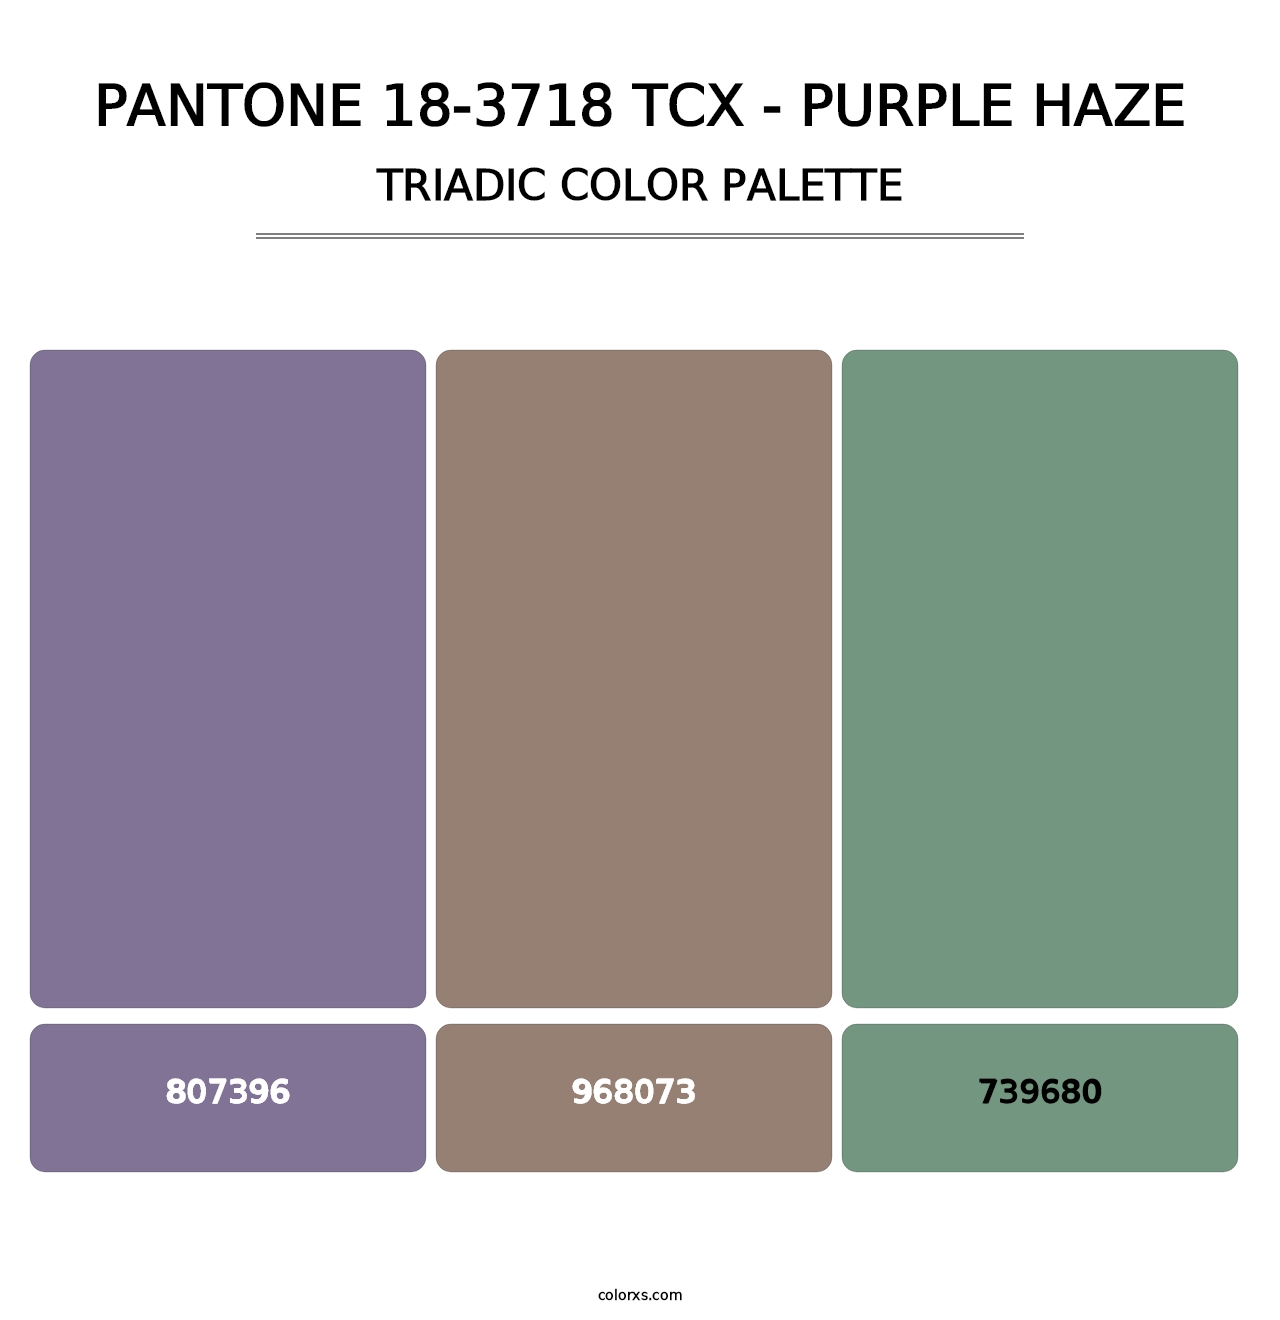 PANTONE 18-3718 TCX - Purple Haze - Triadic Color Palette